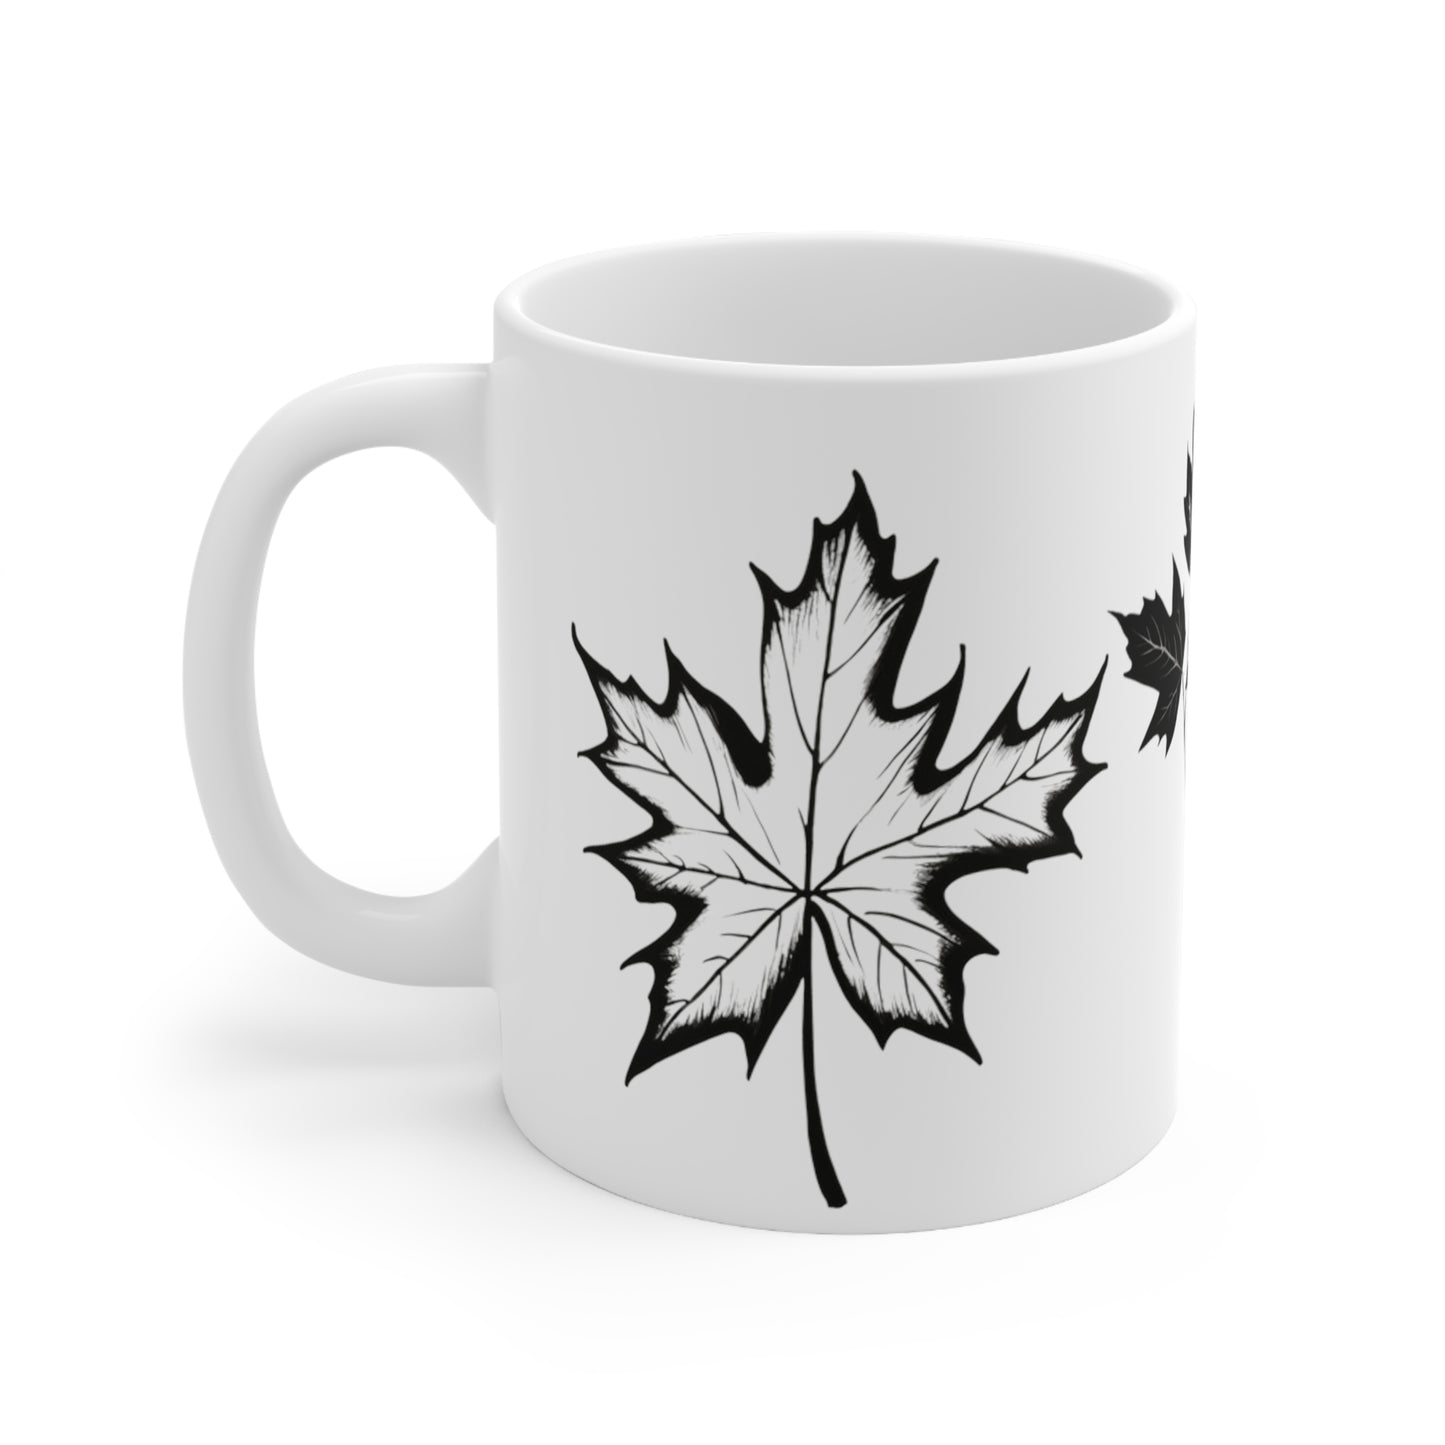 Black and White Maple Leaf Mug - Ceramic Coffee Mug 11oz